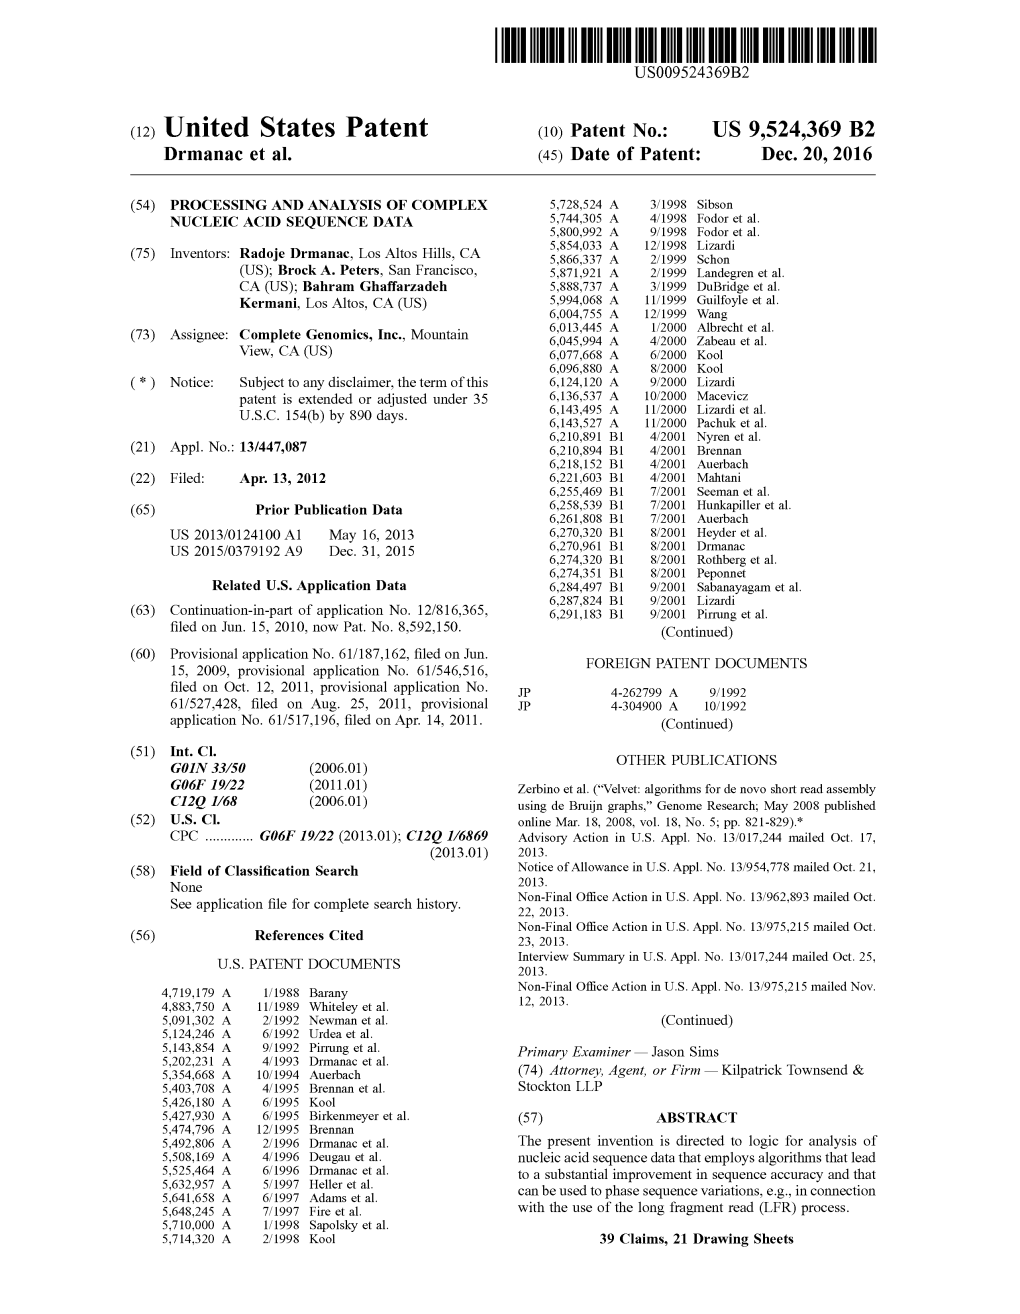 United States Patent (10) Patent No.: US 9,524,369 B2 Drmanac Et Al